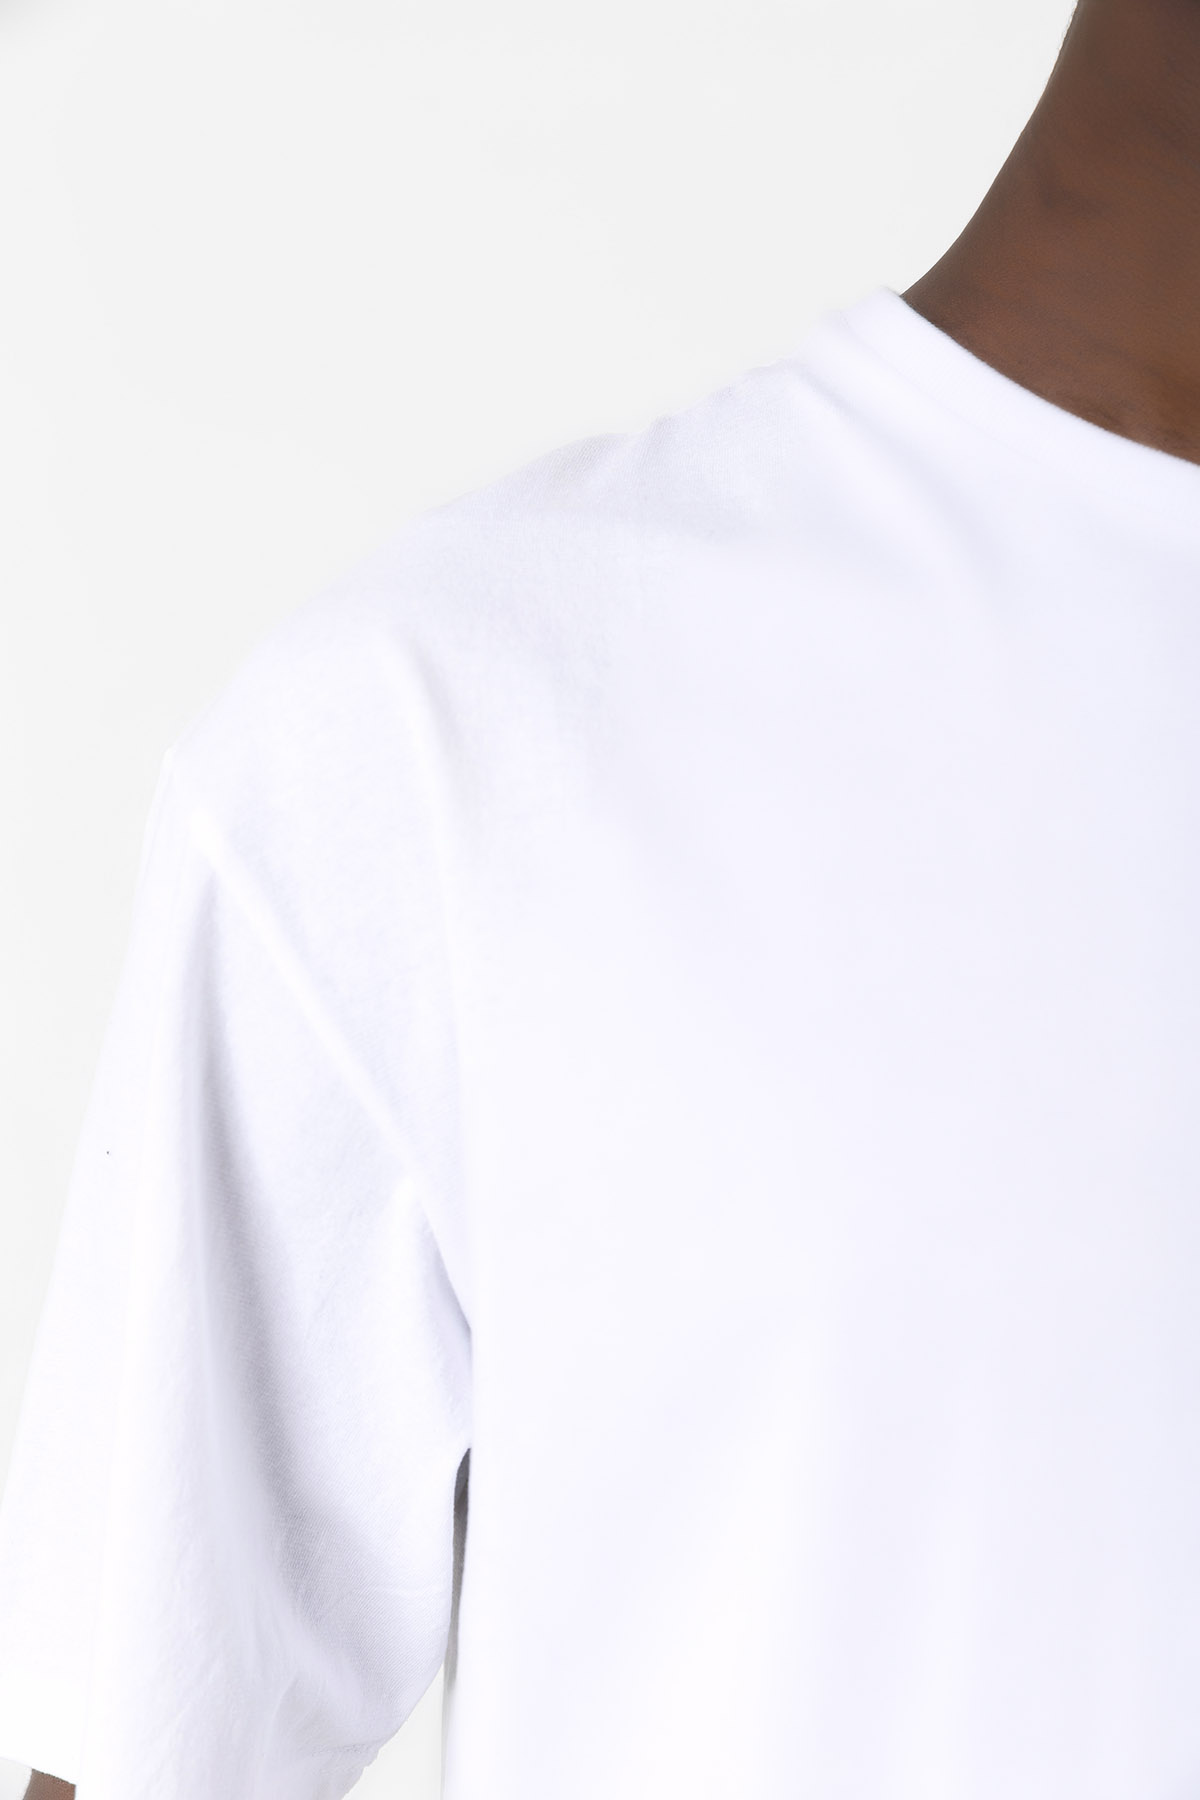 Top Gun Maverick Badge Layout Group Beyaz Erkek Oversize Tshirt